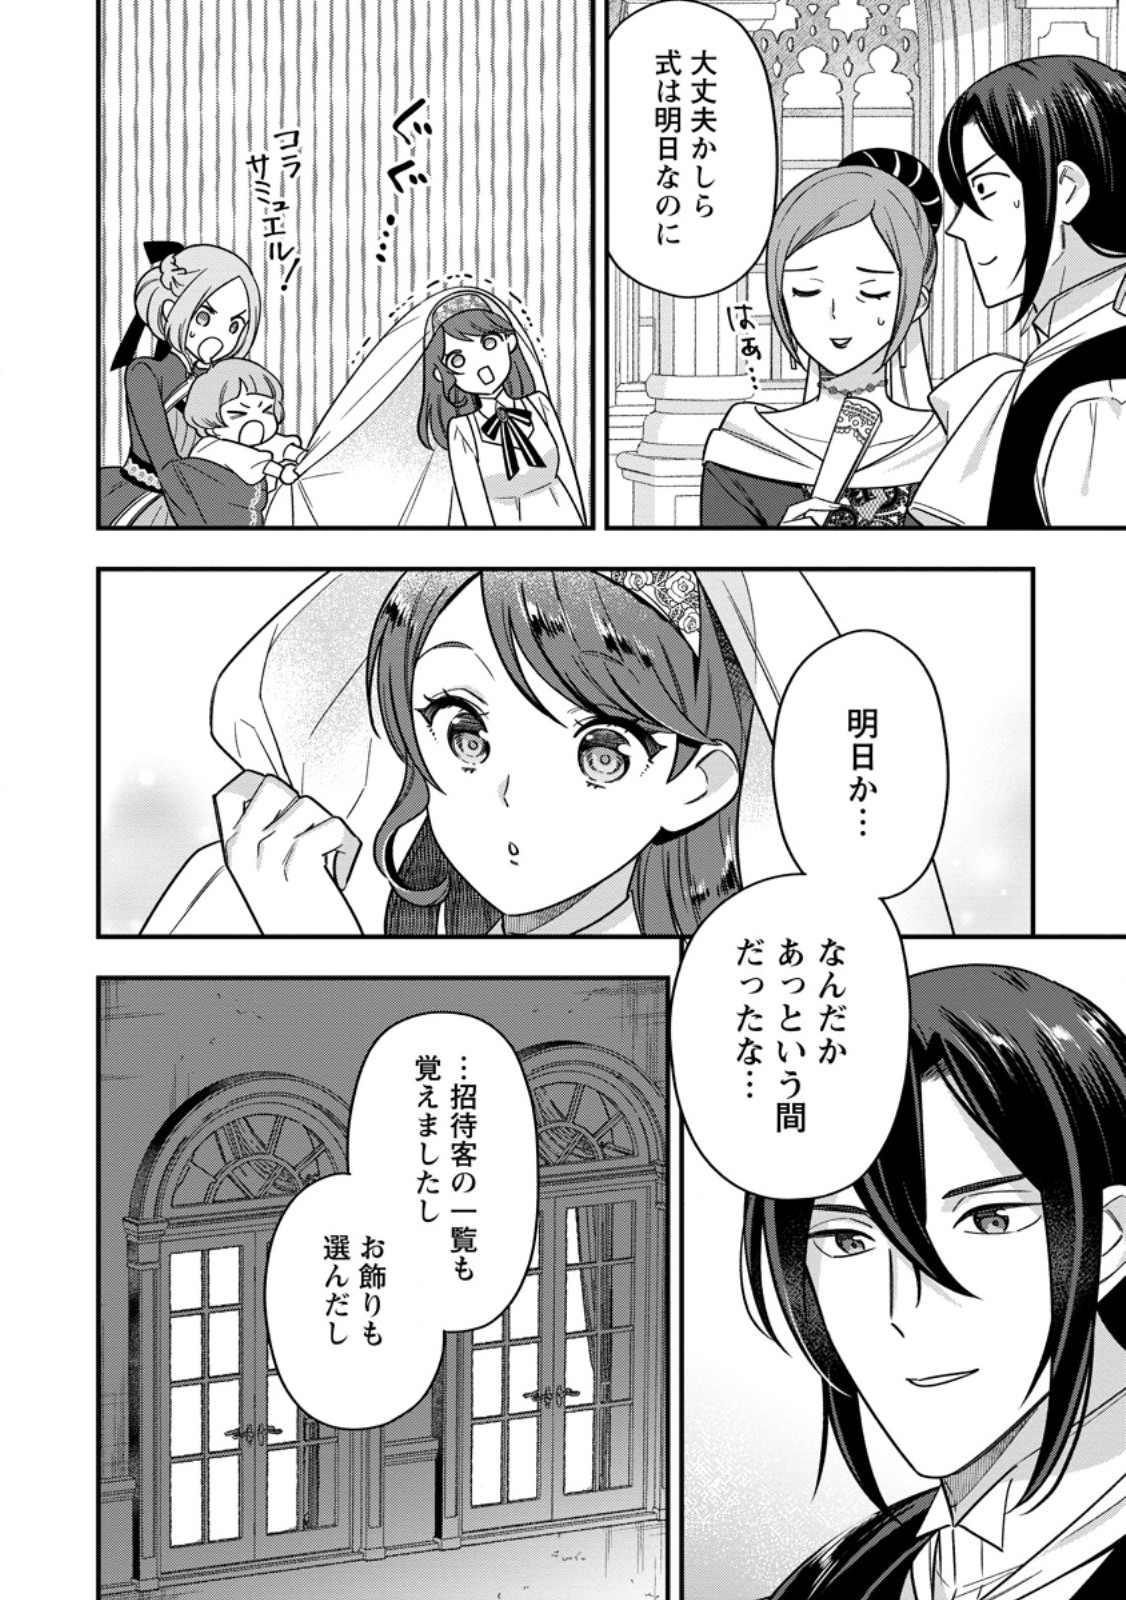 Aisanai to Iwaremashite mo - Chapter 10.1 - Page 10